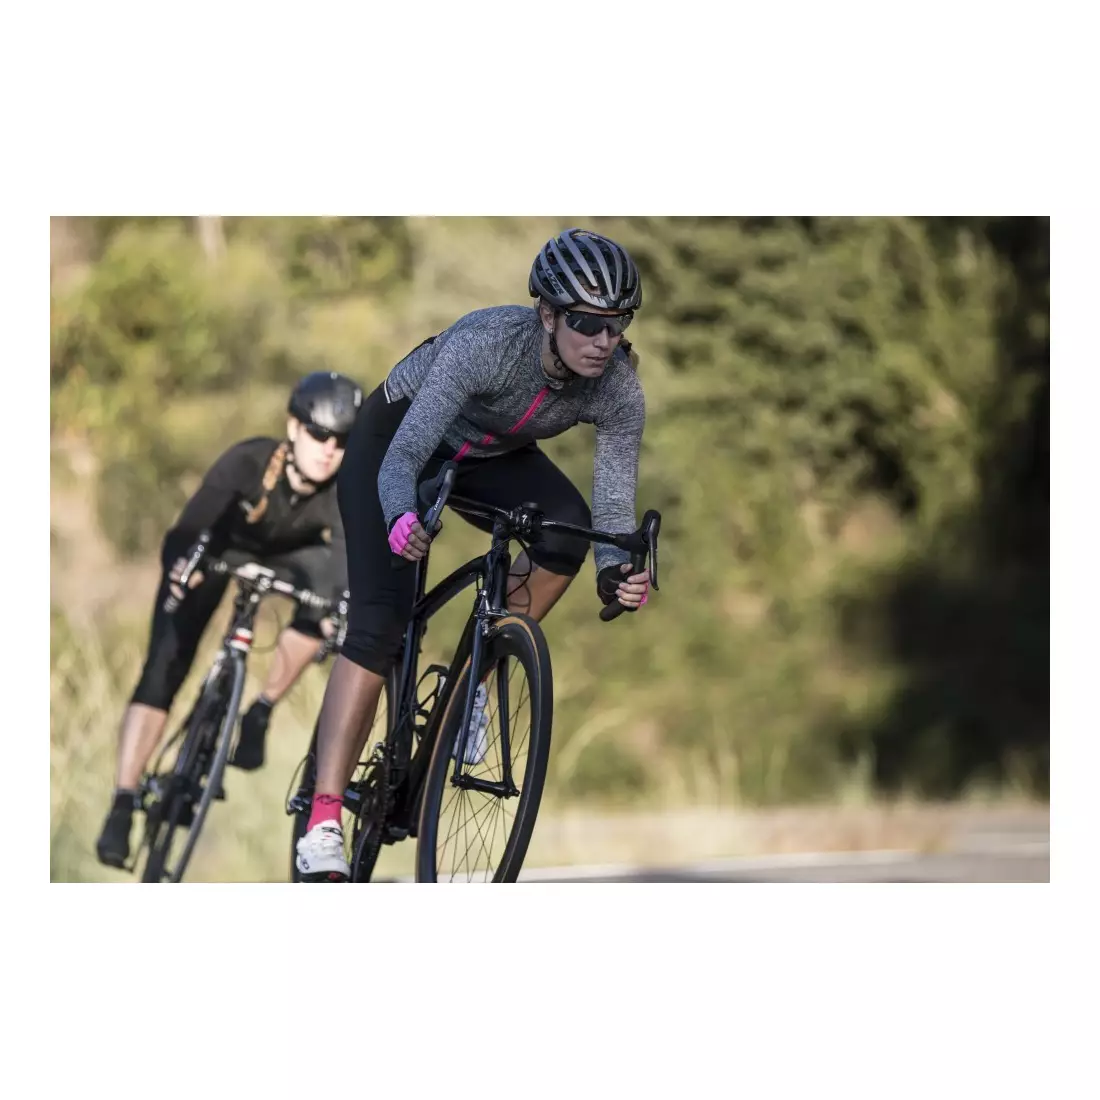 ROGELLI BENICE 2.0 warm women's cycling jersey, gray-pink